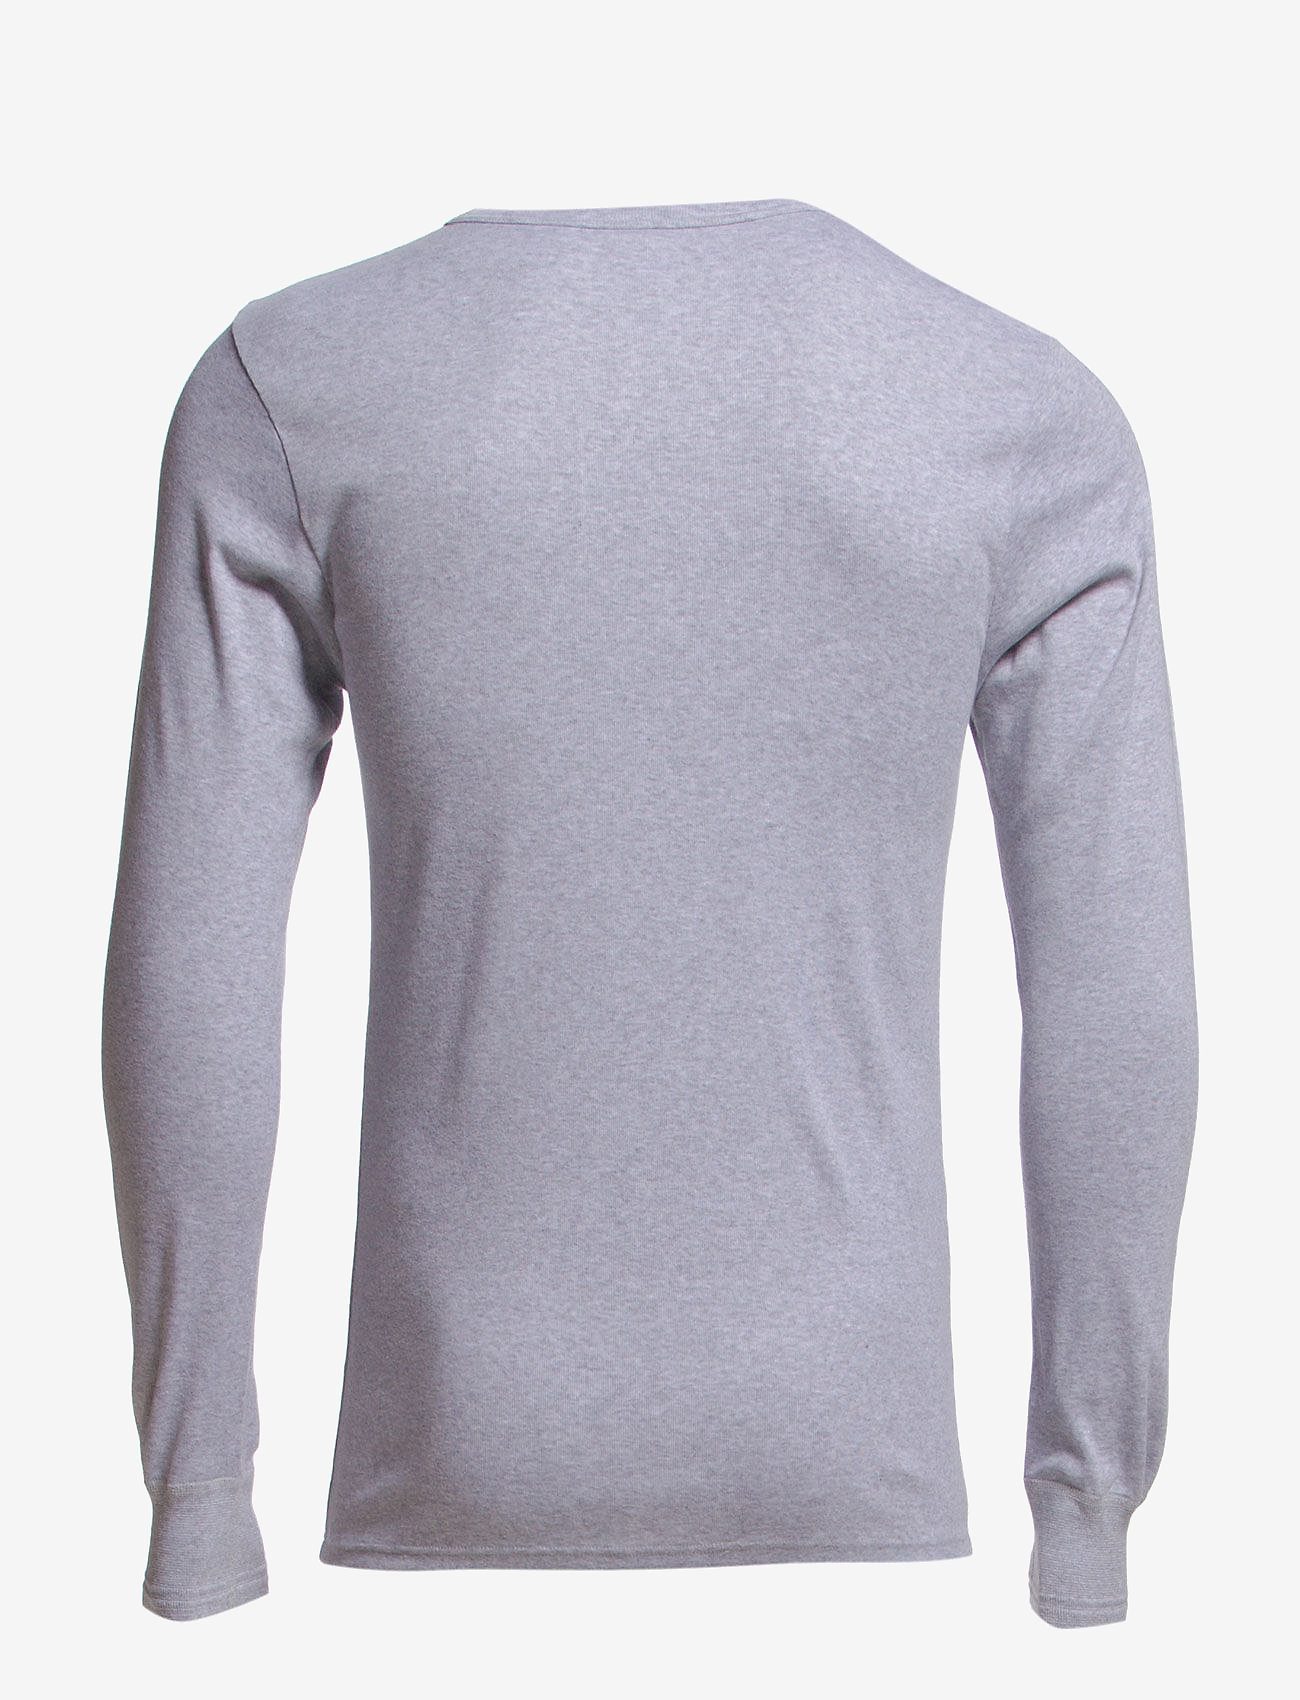 Dovre - Dovre T-shirt Long sleeves - t-shirts - grey melan - 1